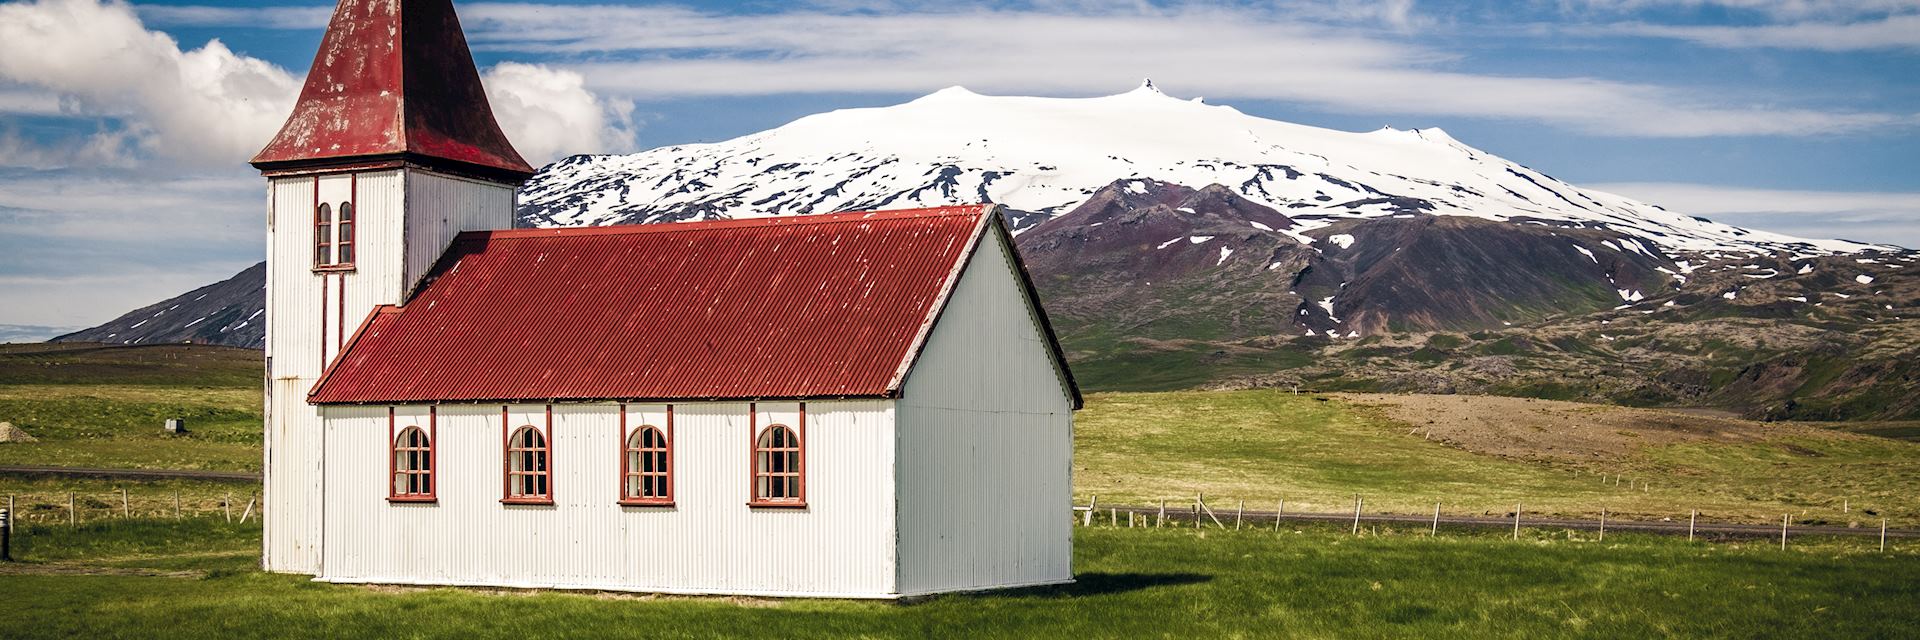 Church on Snæfellsnes Peninsula